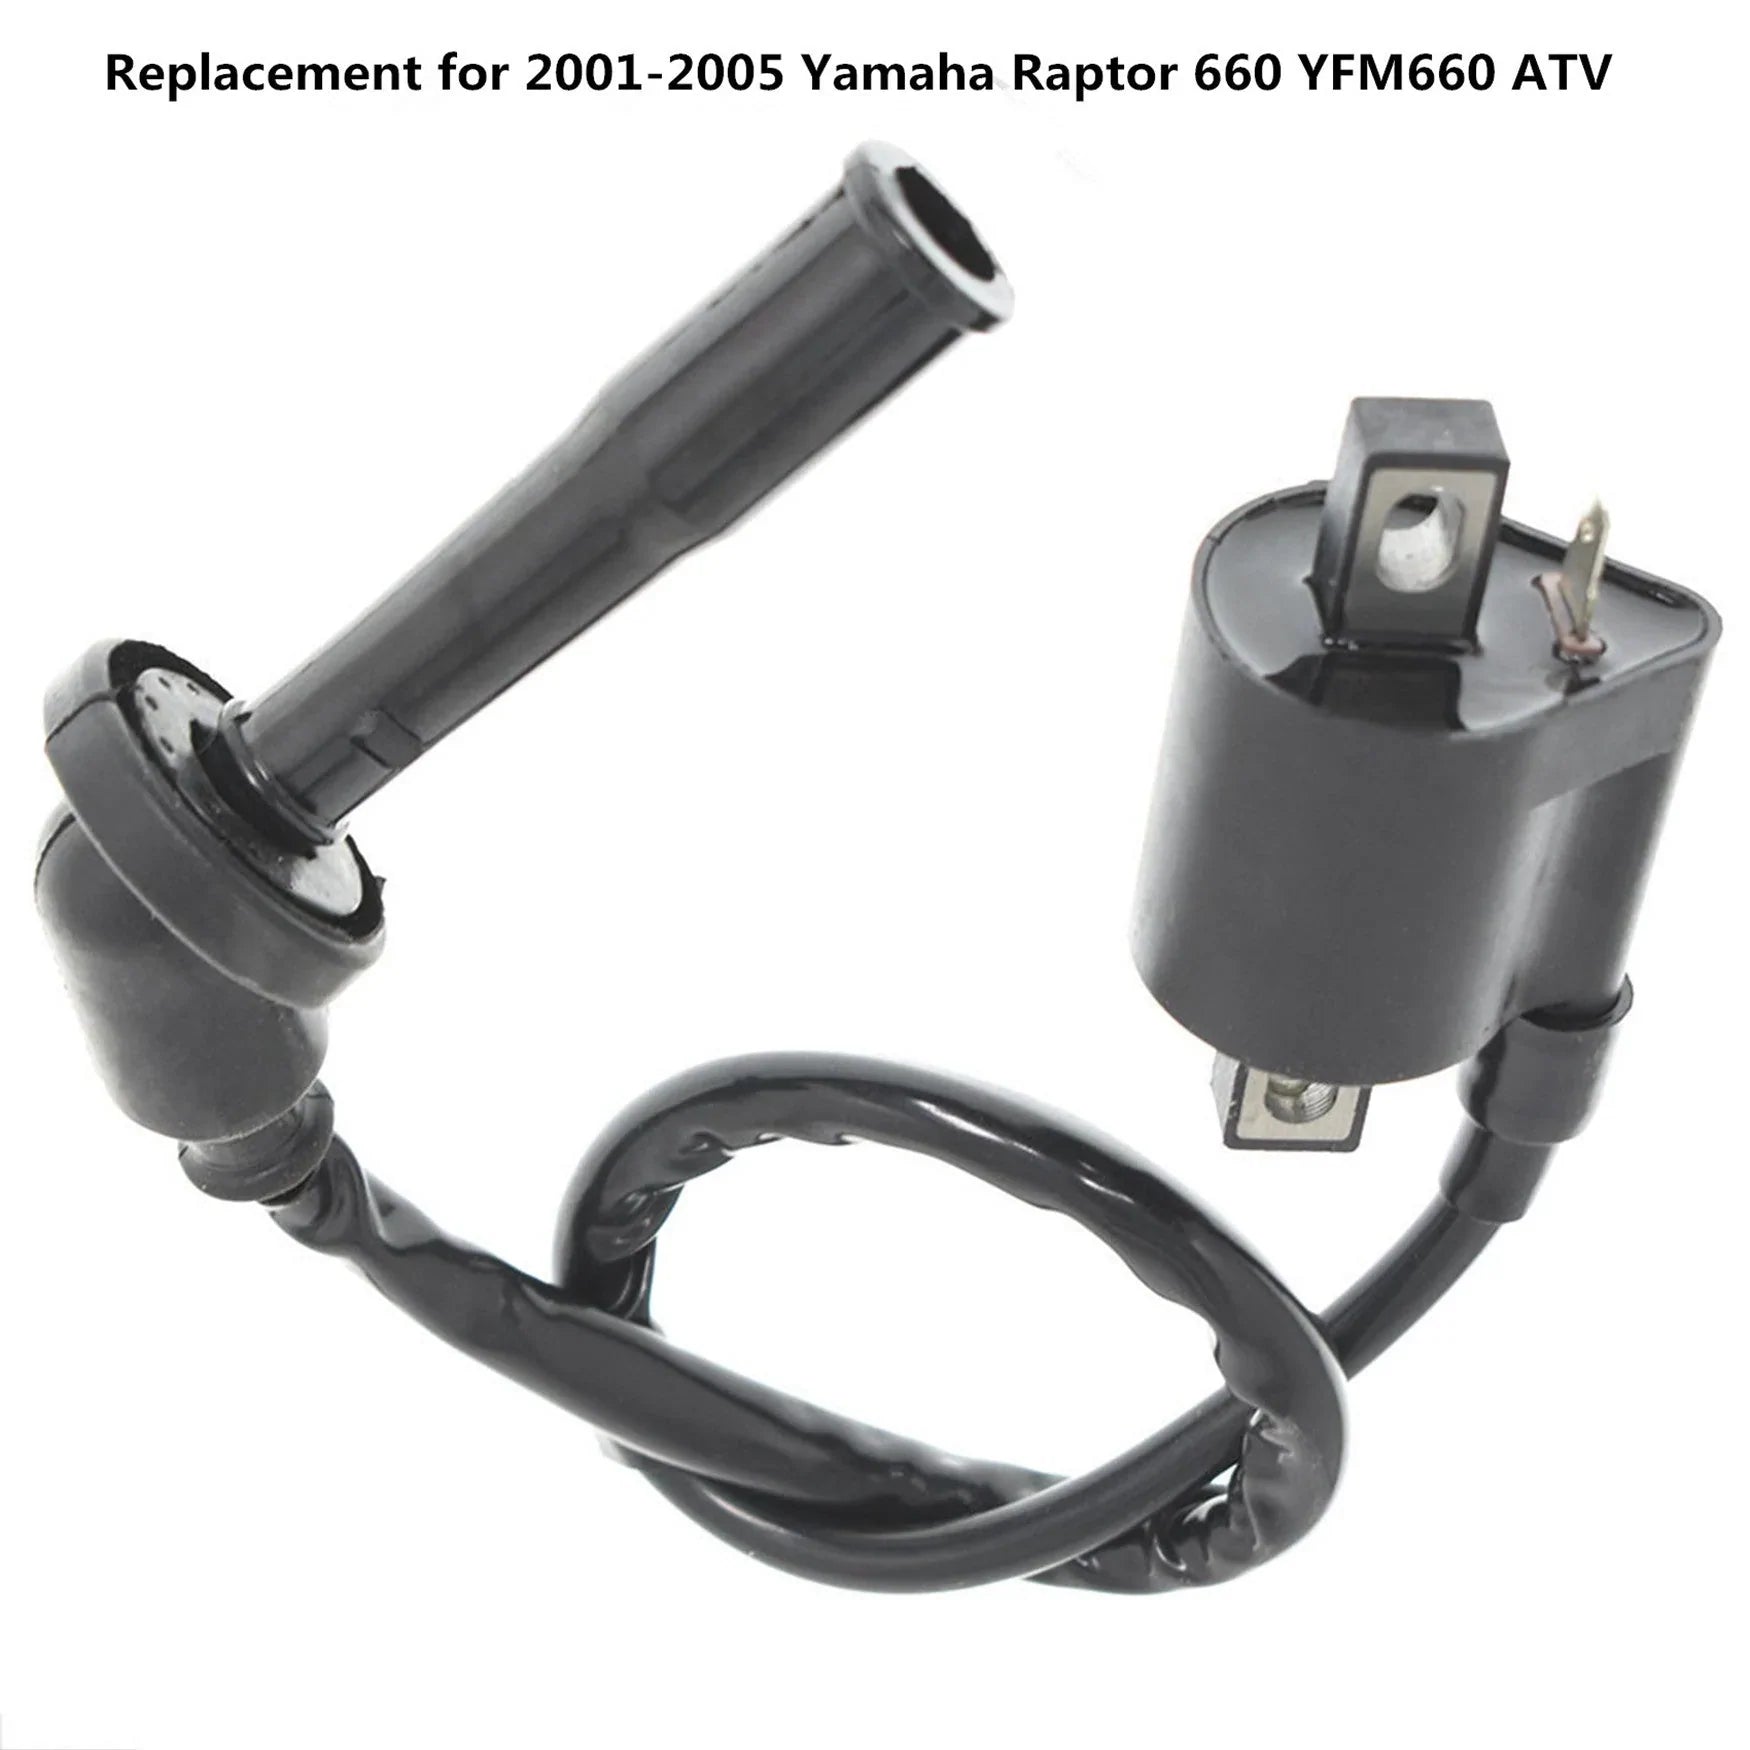 labwork Ignition Coil Replacement for Yamaha ATV Raptor 660 YFM660 2001-2005 LAB WORK MOTO